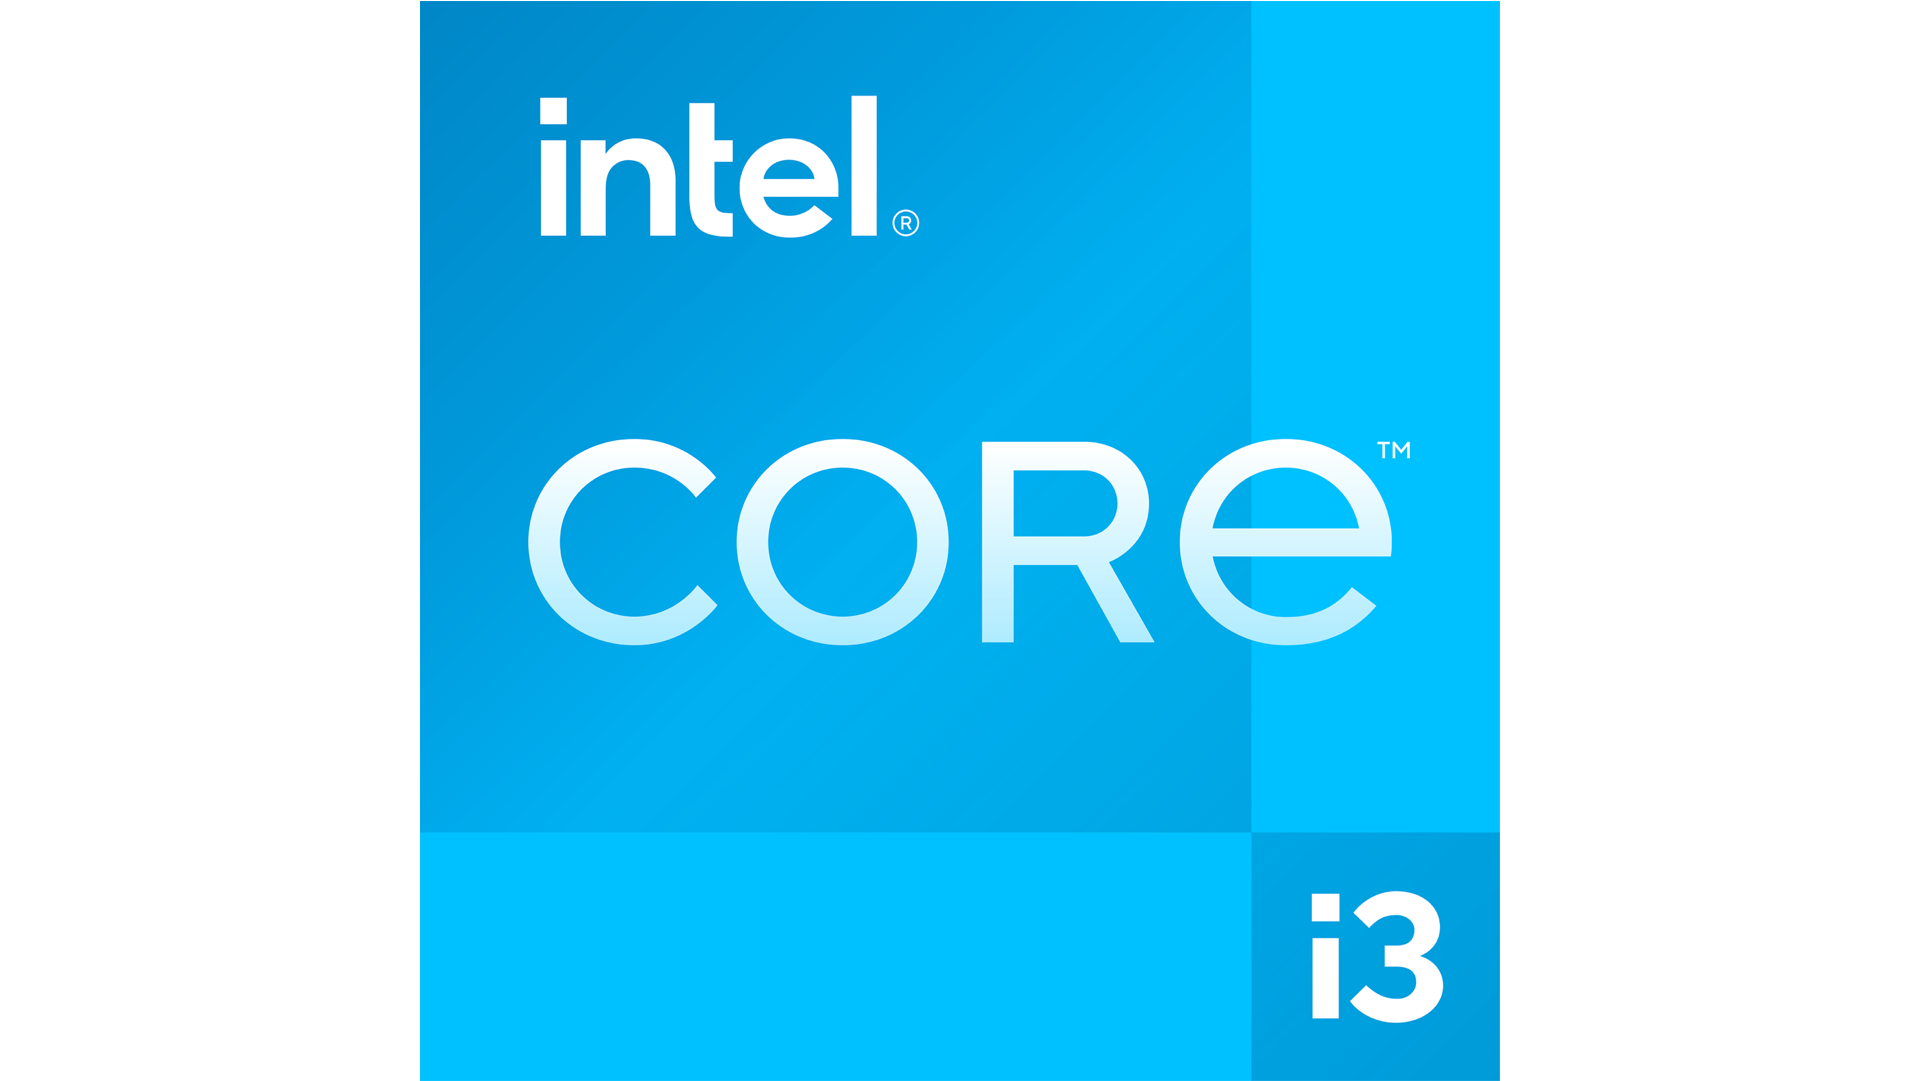 【Intel】Core i3 12100F - blog.knak.jp